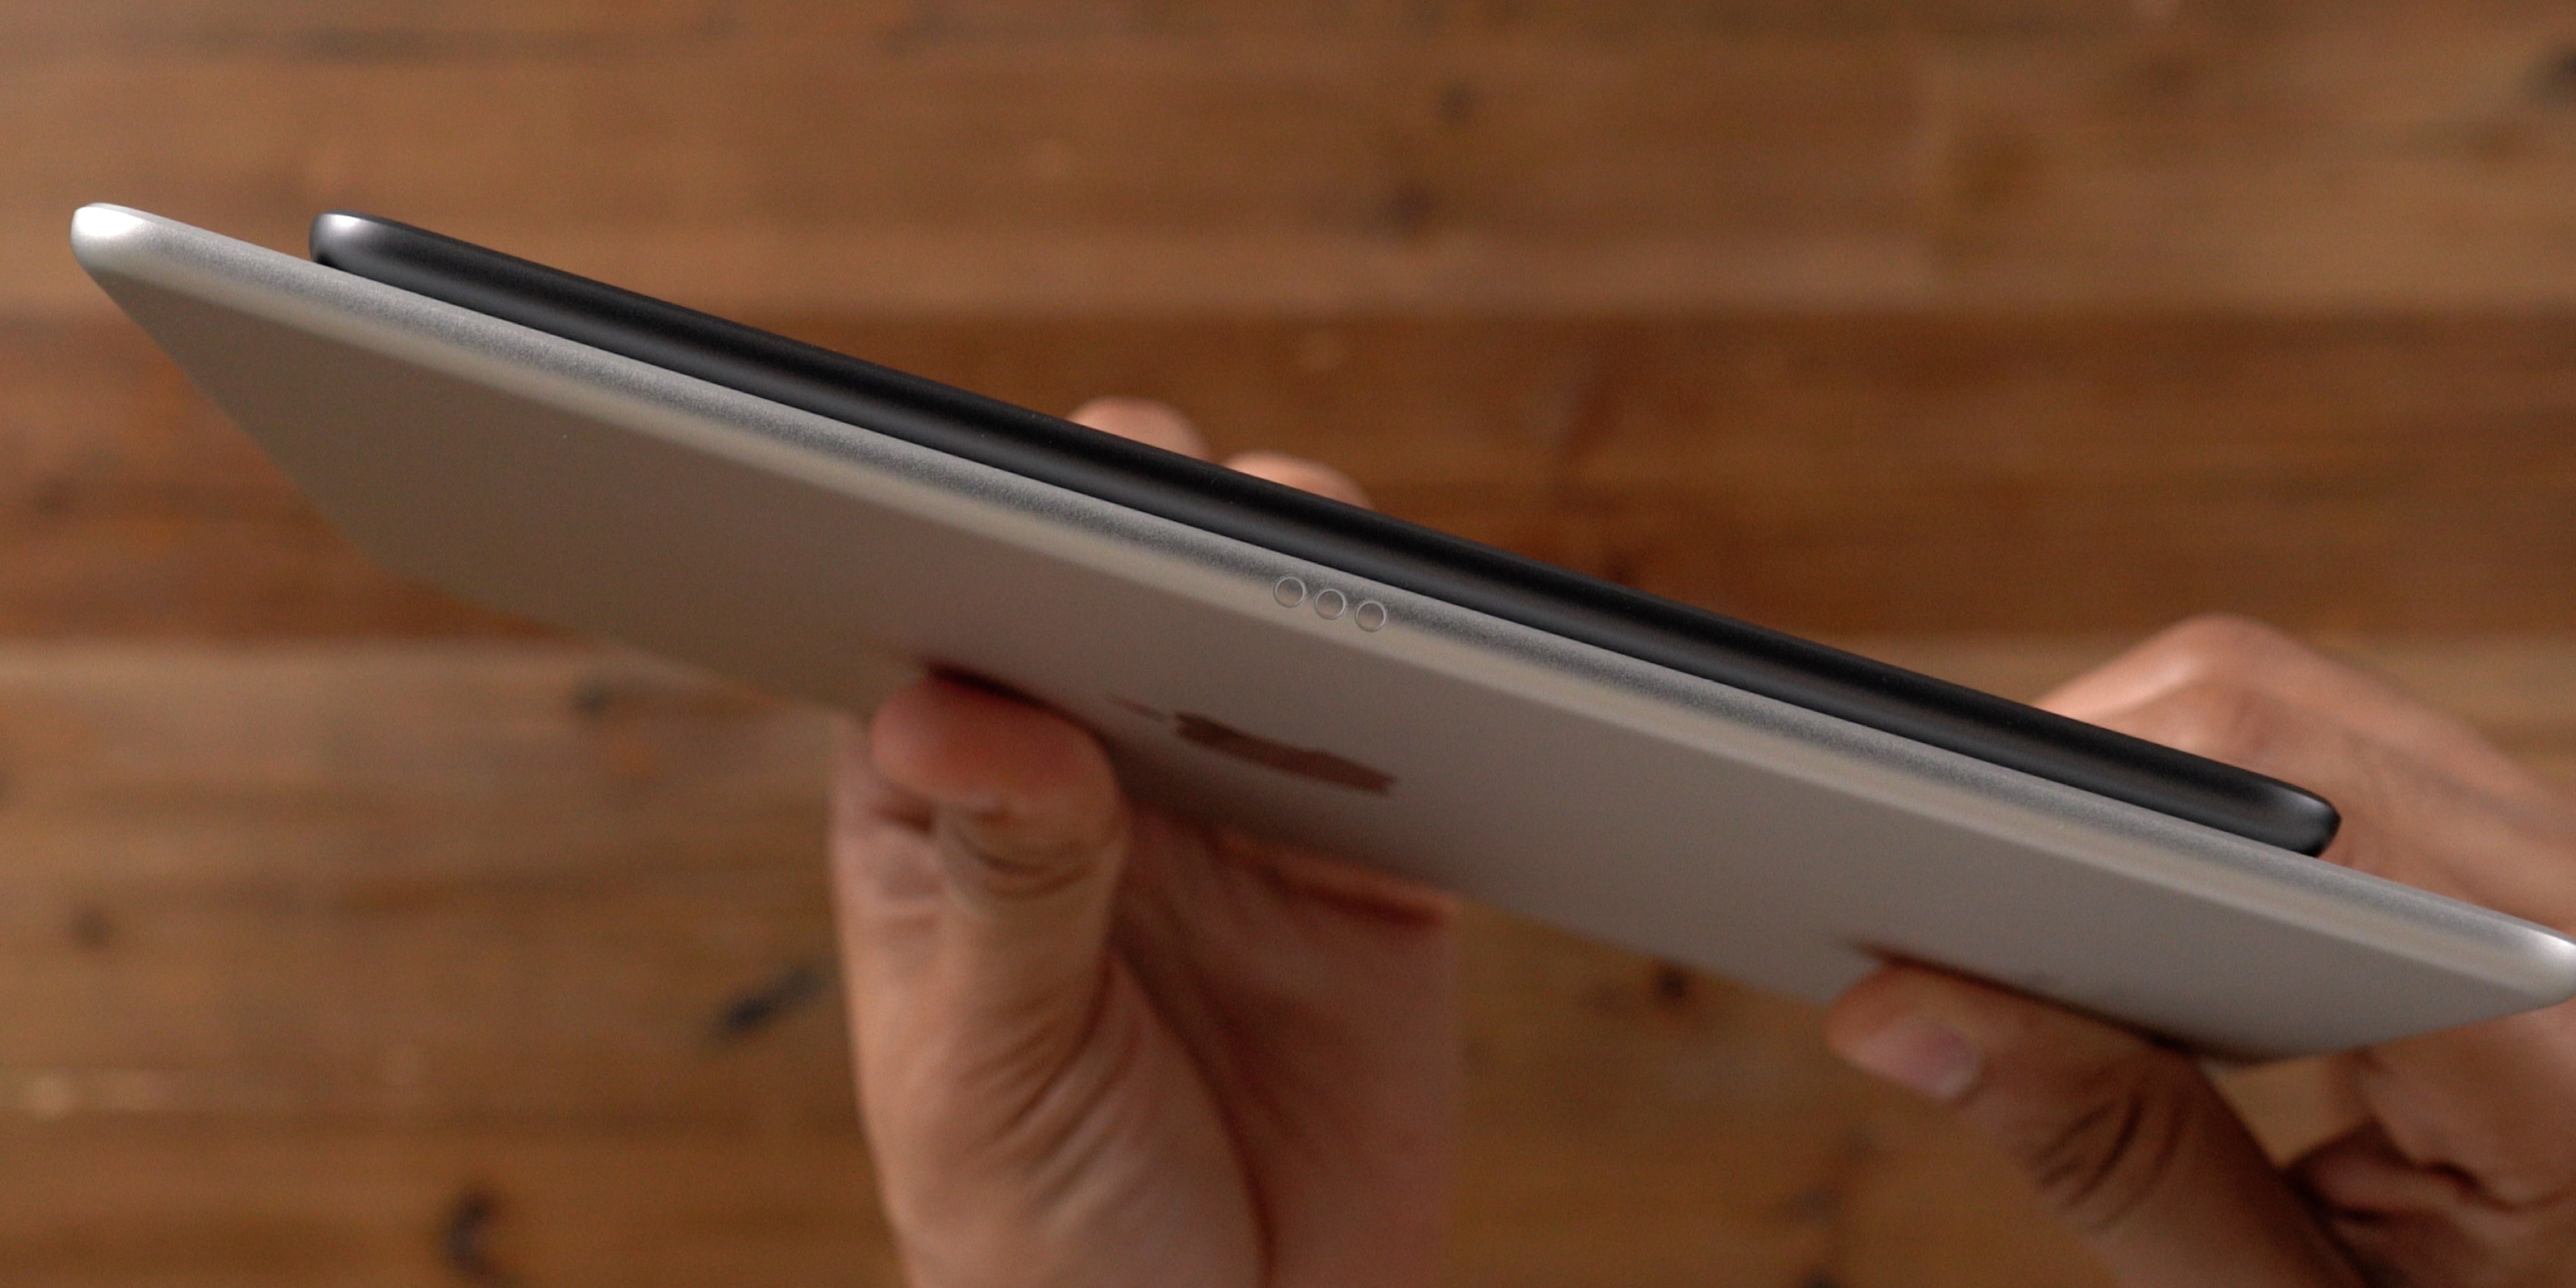 Apple iPad Mini 5 Review: Pint-Sized Powerhouse